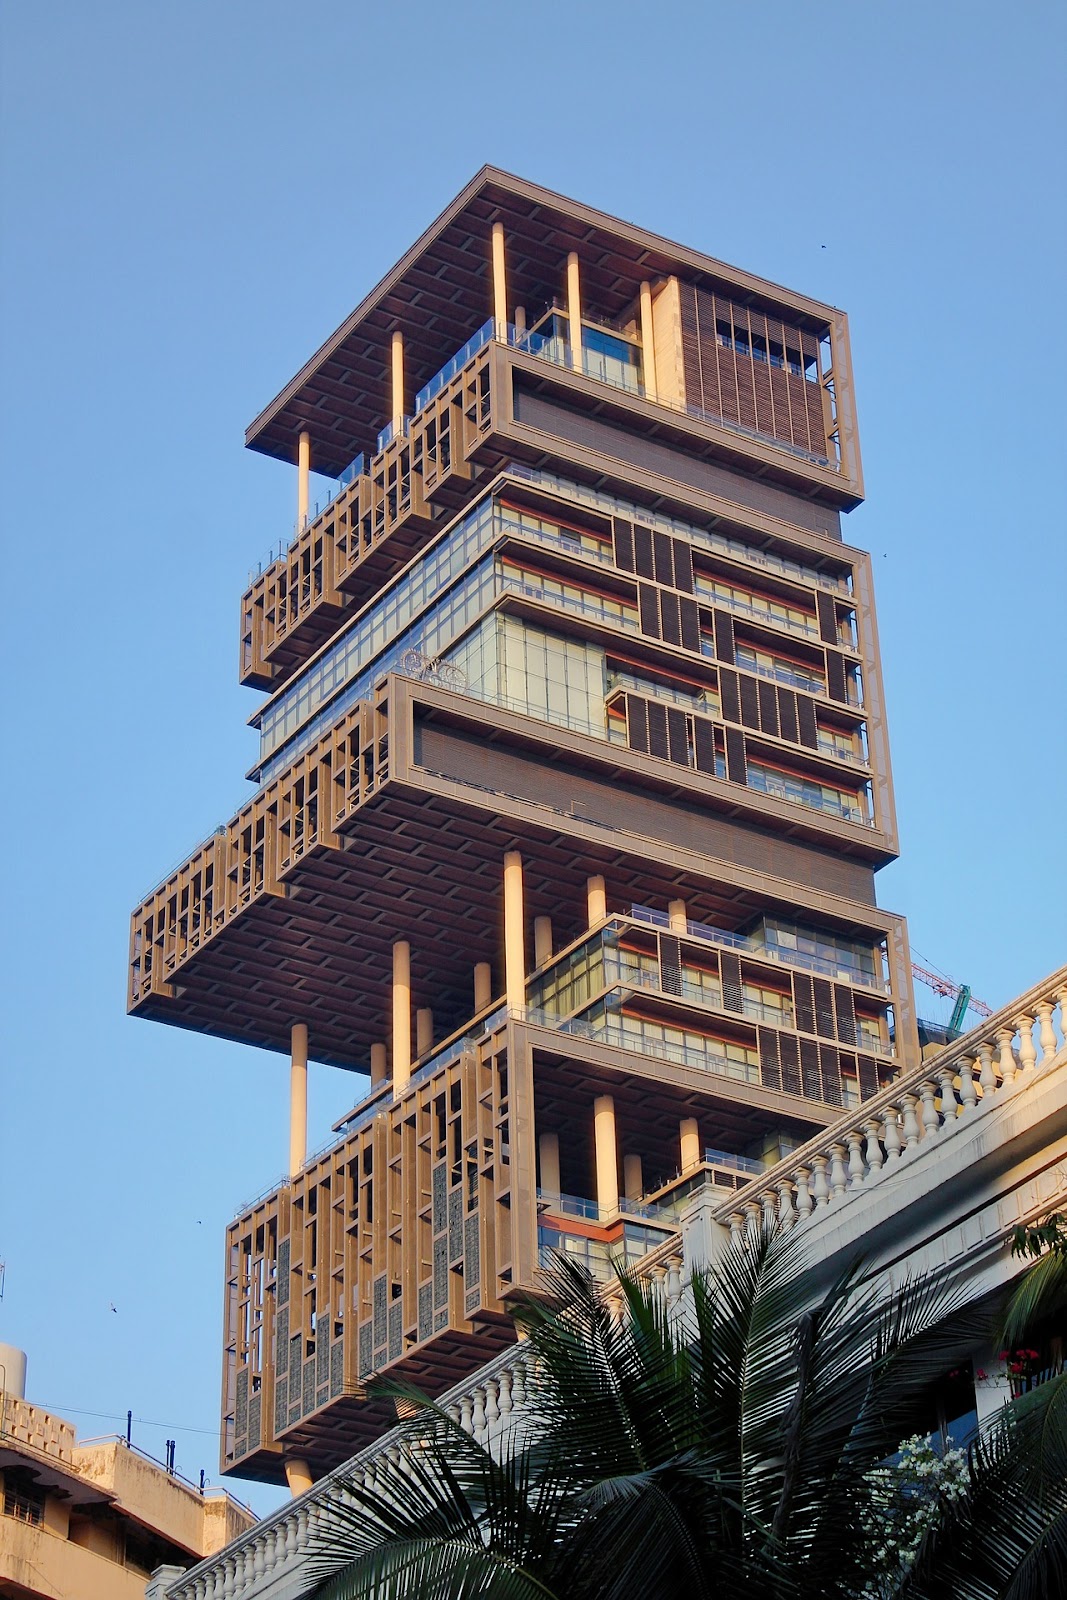 antilia most expensive house in mumbai